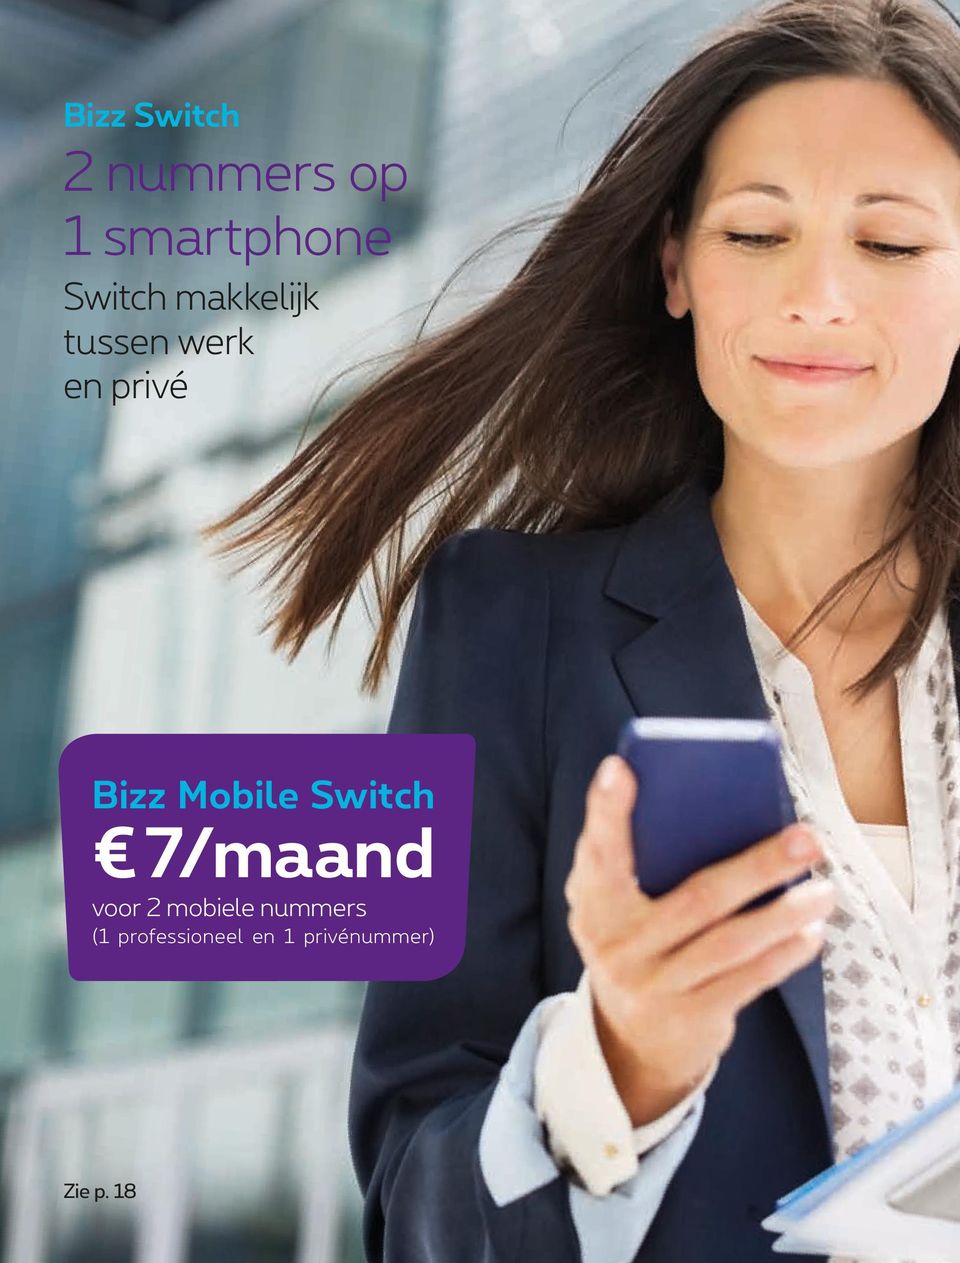 Mobile Switch 7/maand voor 2 mobiele